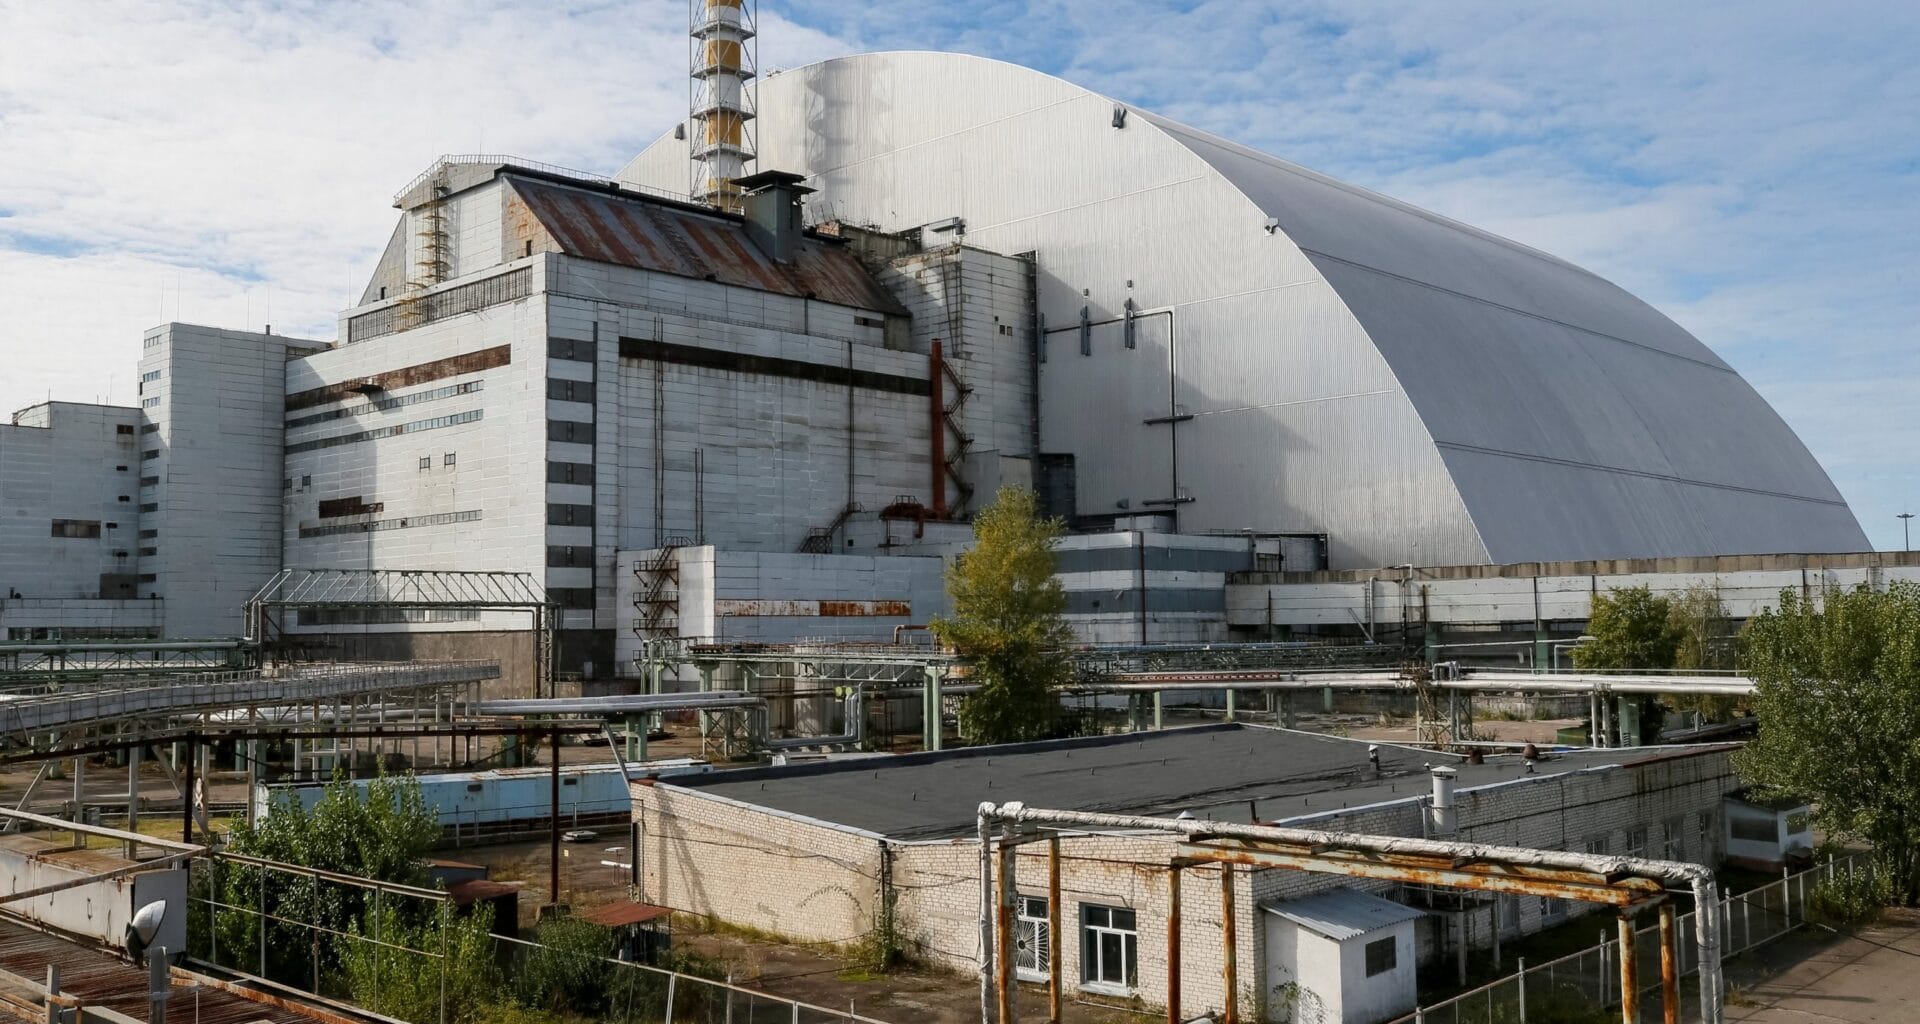 Reator 4 de chernobyl